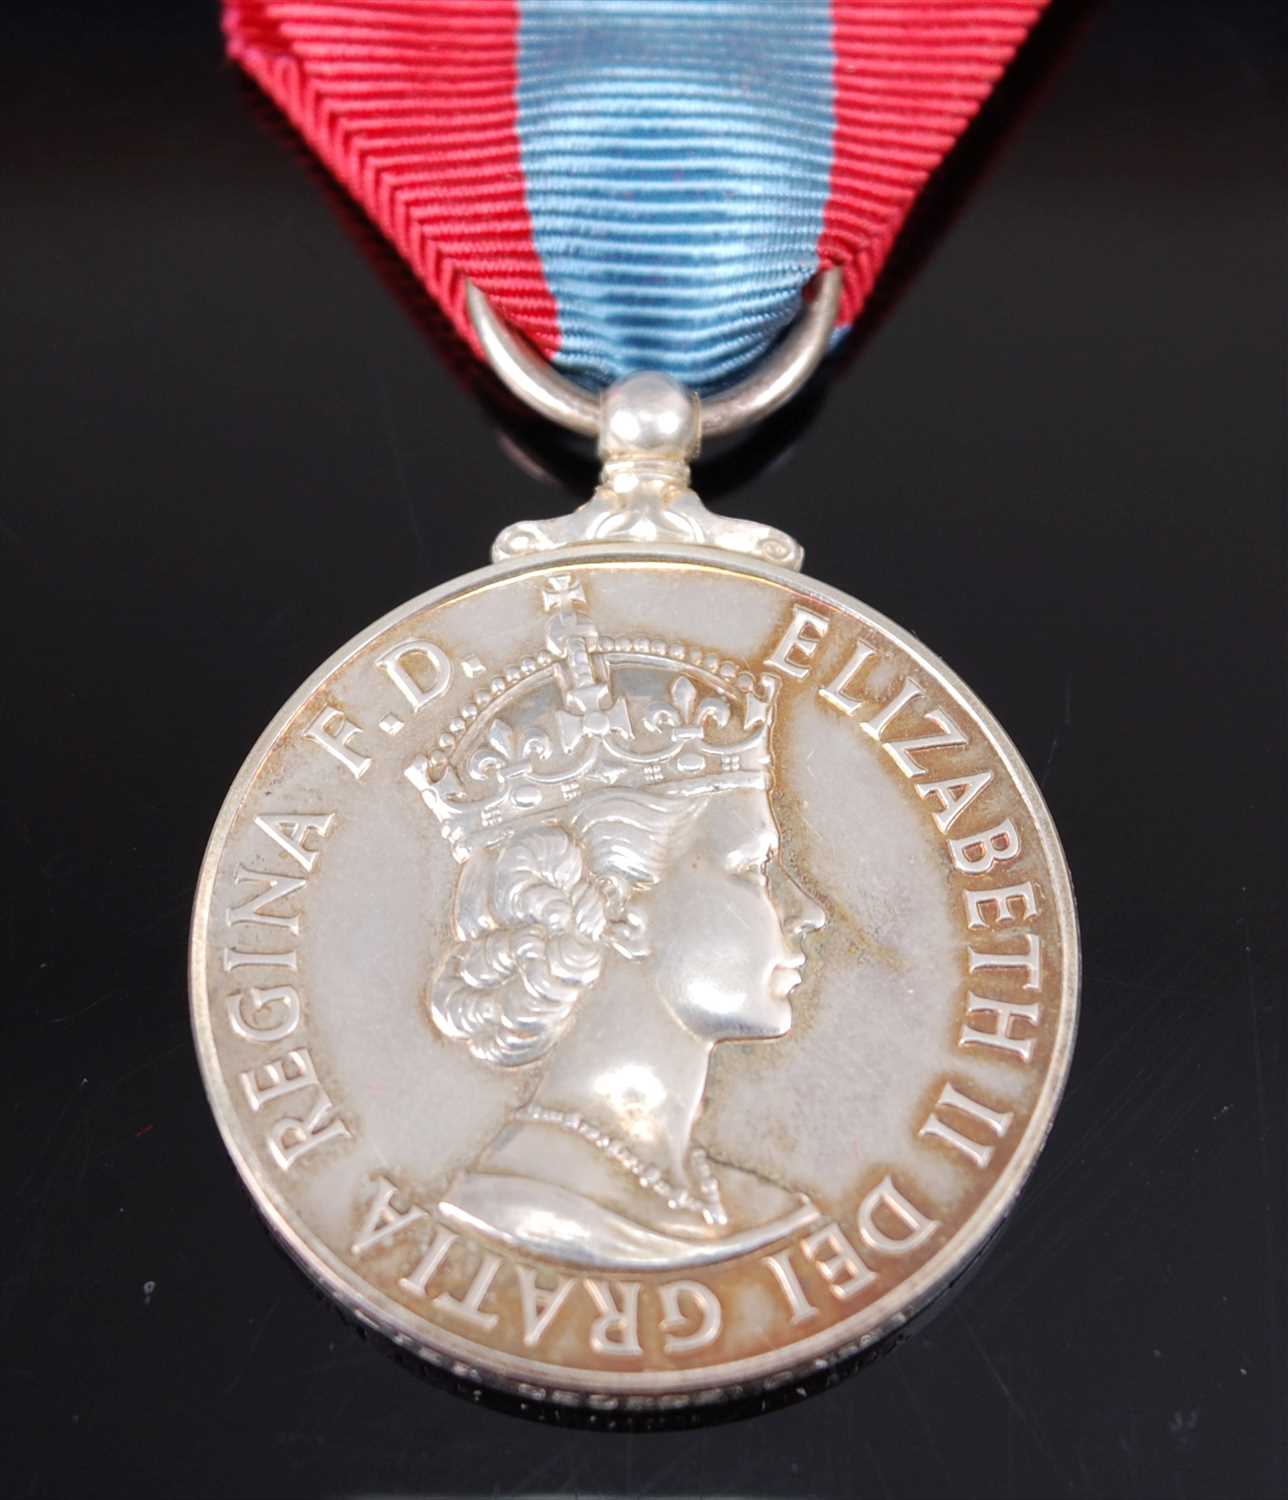 Lot 204 - An Elizabeth II Imperial Service medal